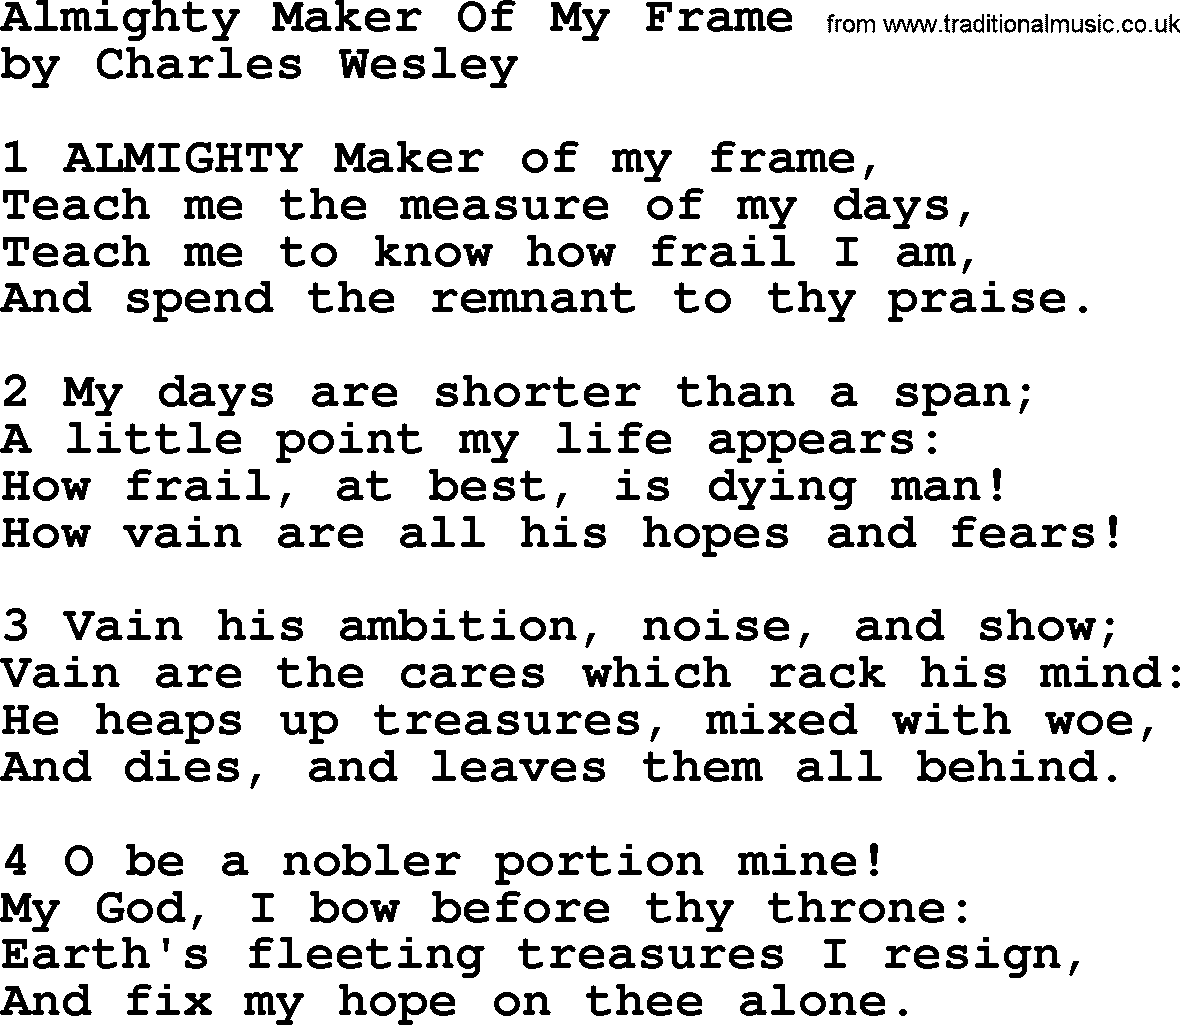 Charles Wesley hymn: Almighty Maker Of My Frame, lyrics